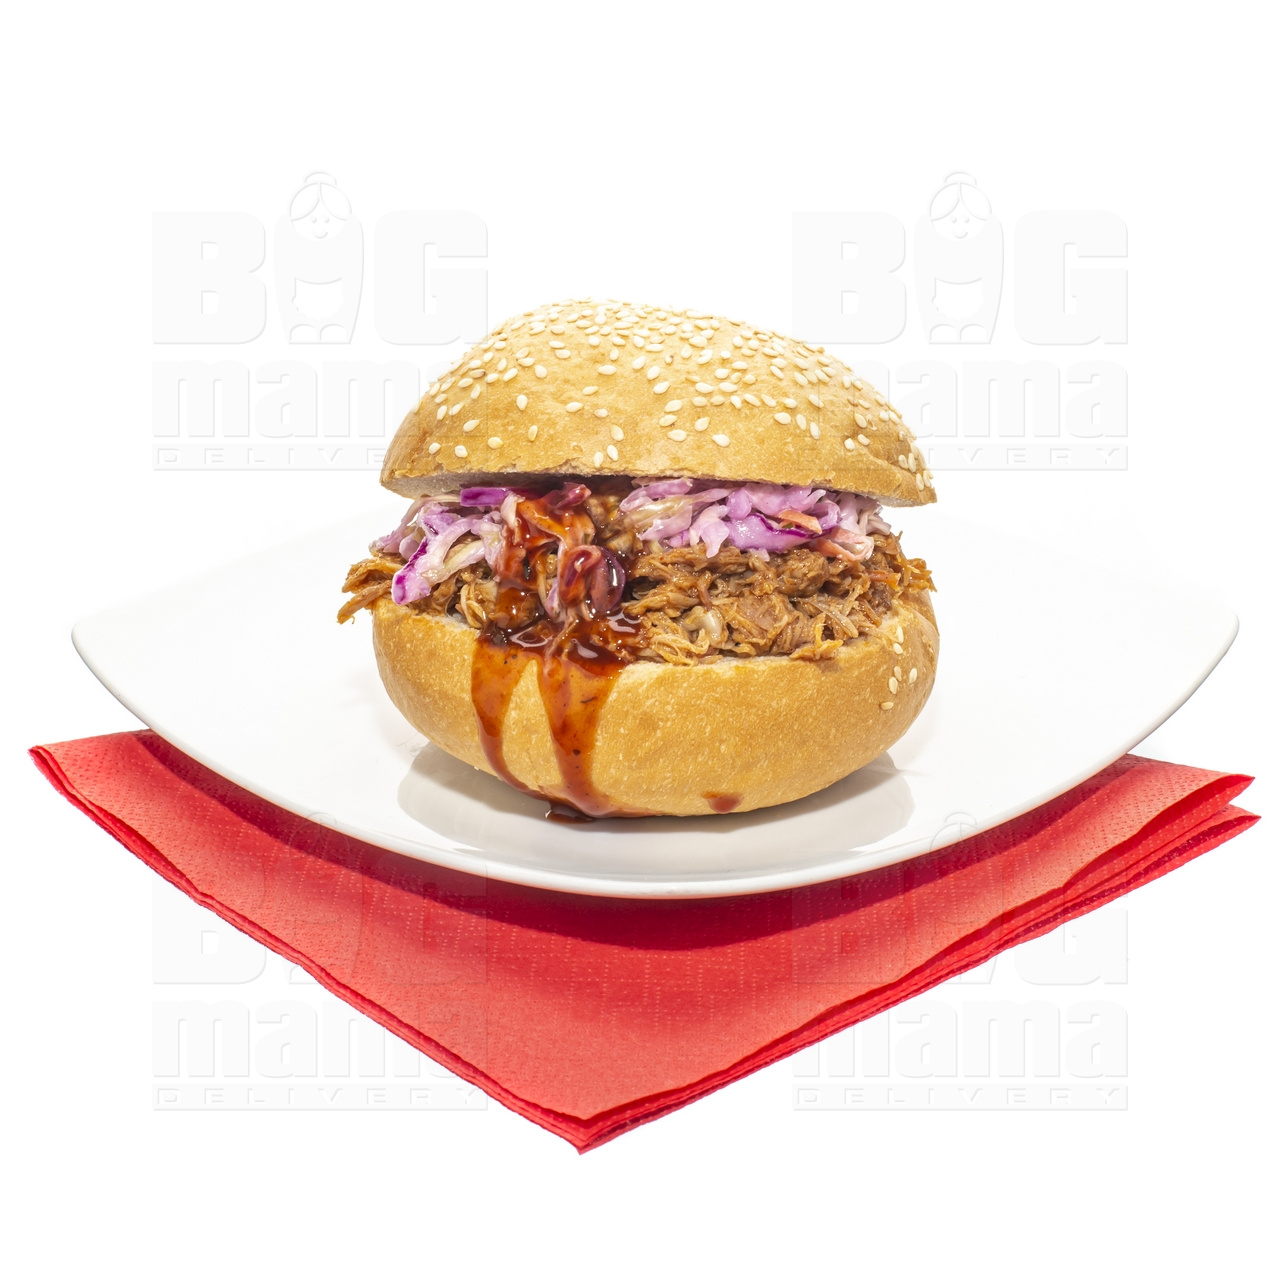 Product #206 image - Sandviș BBQ Pulled porc